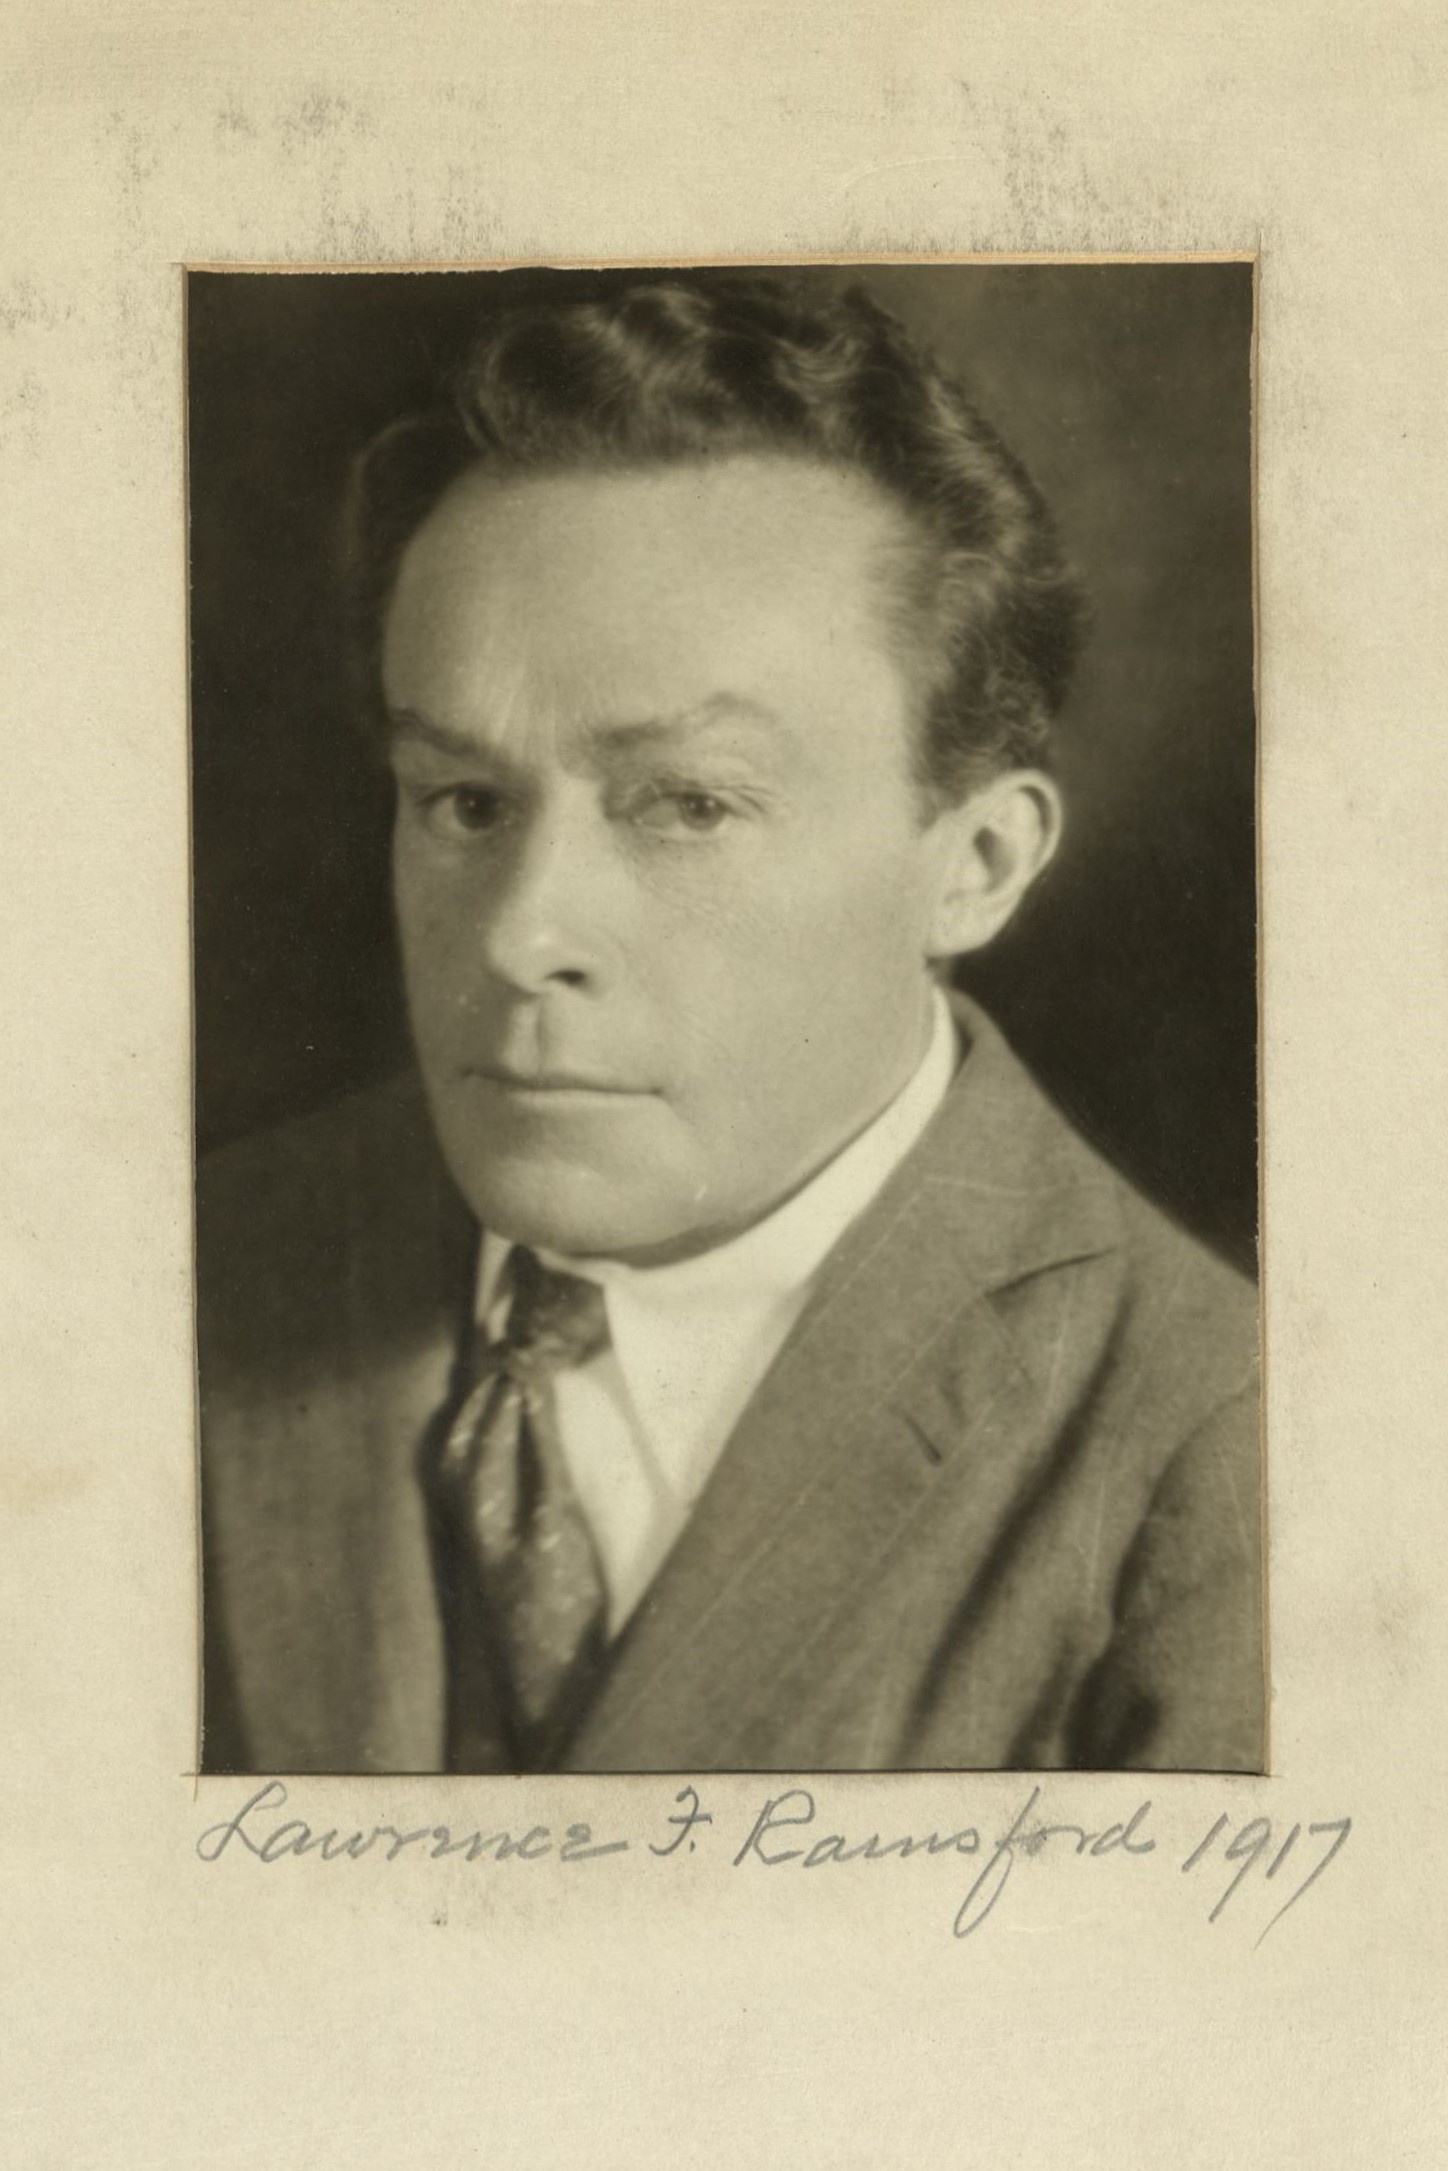 Member portrait of Laurence F. Rainsford